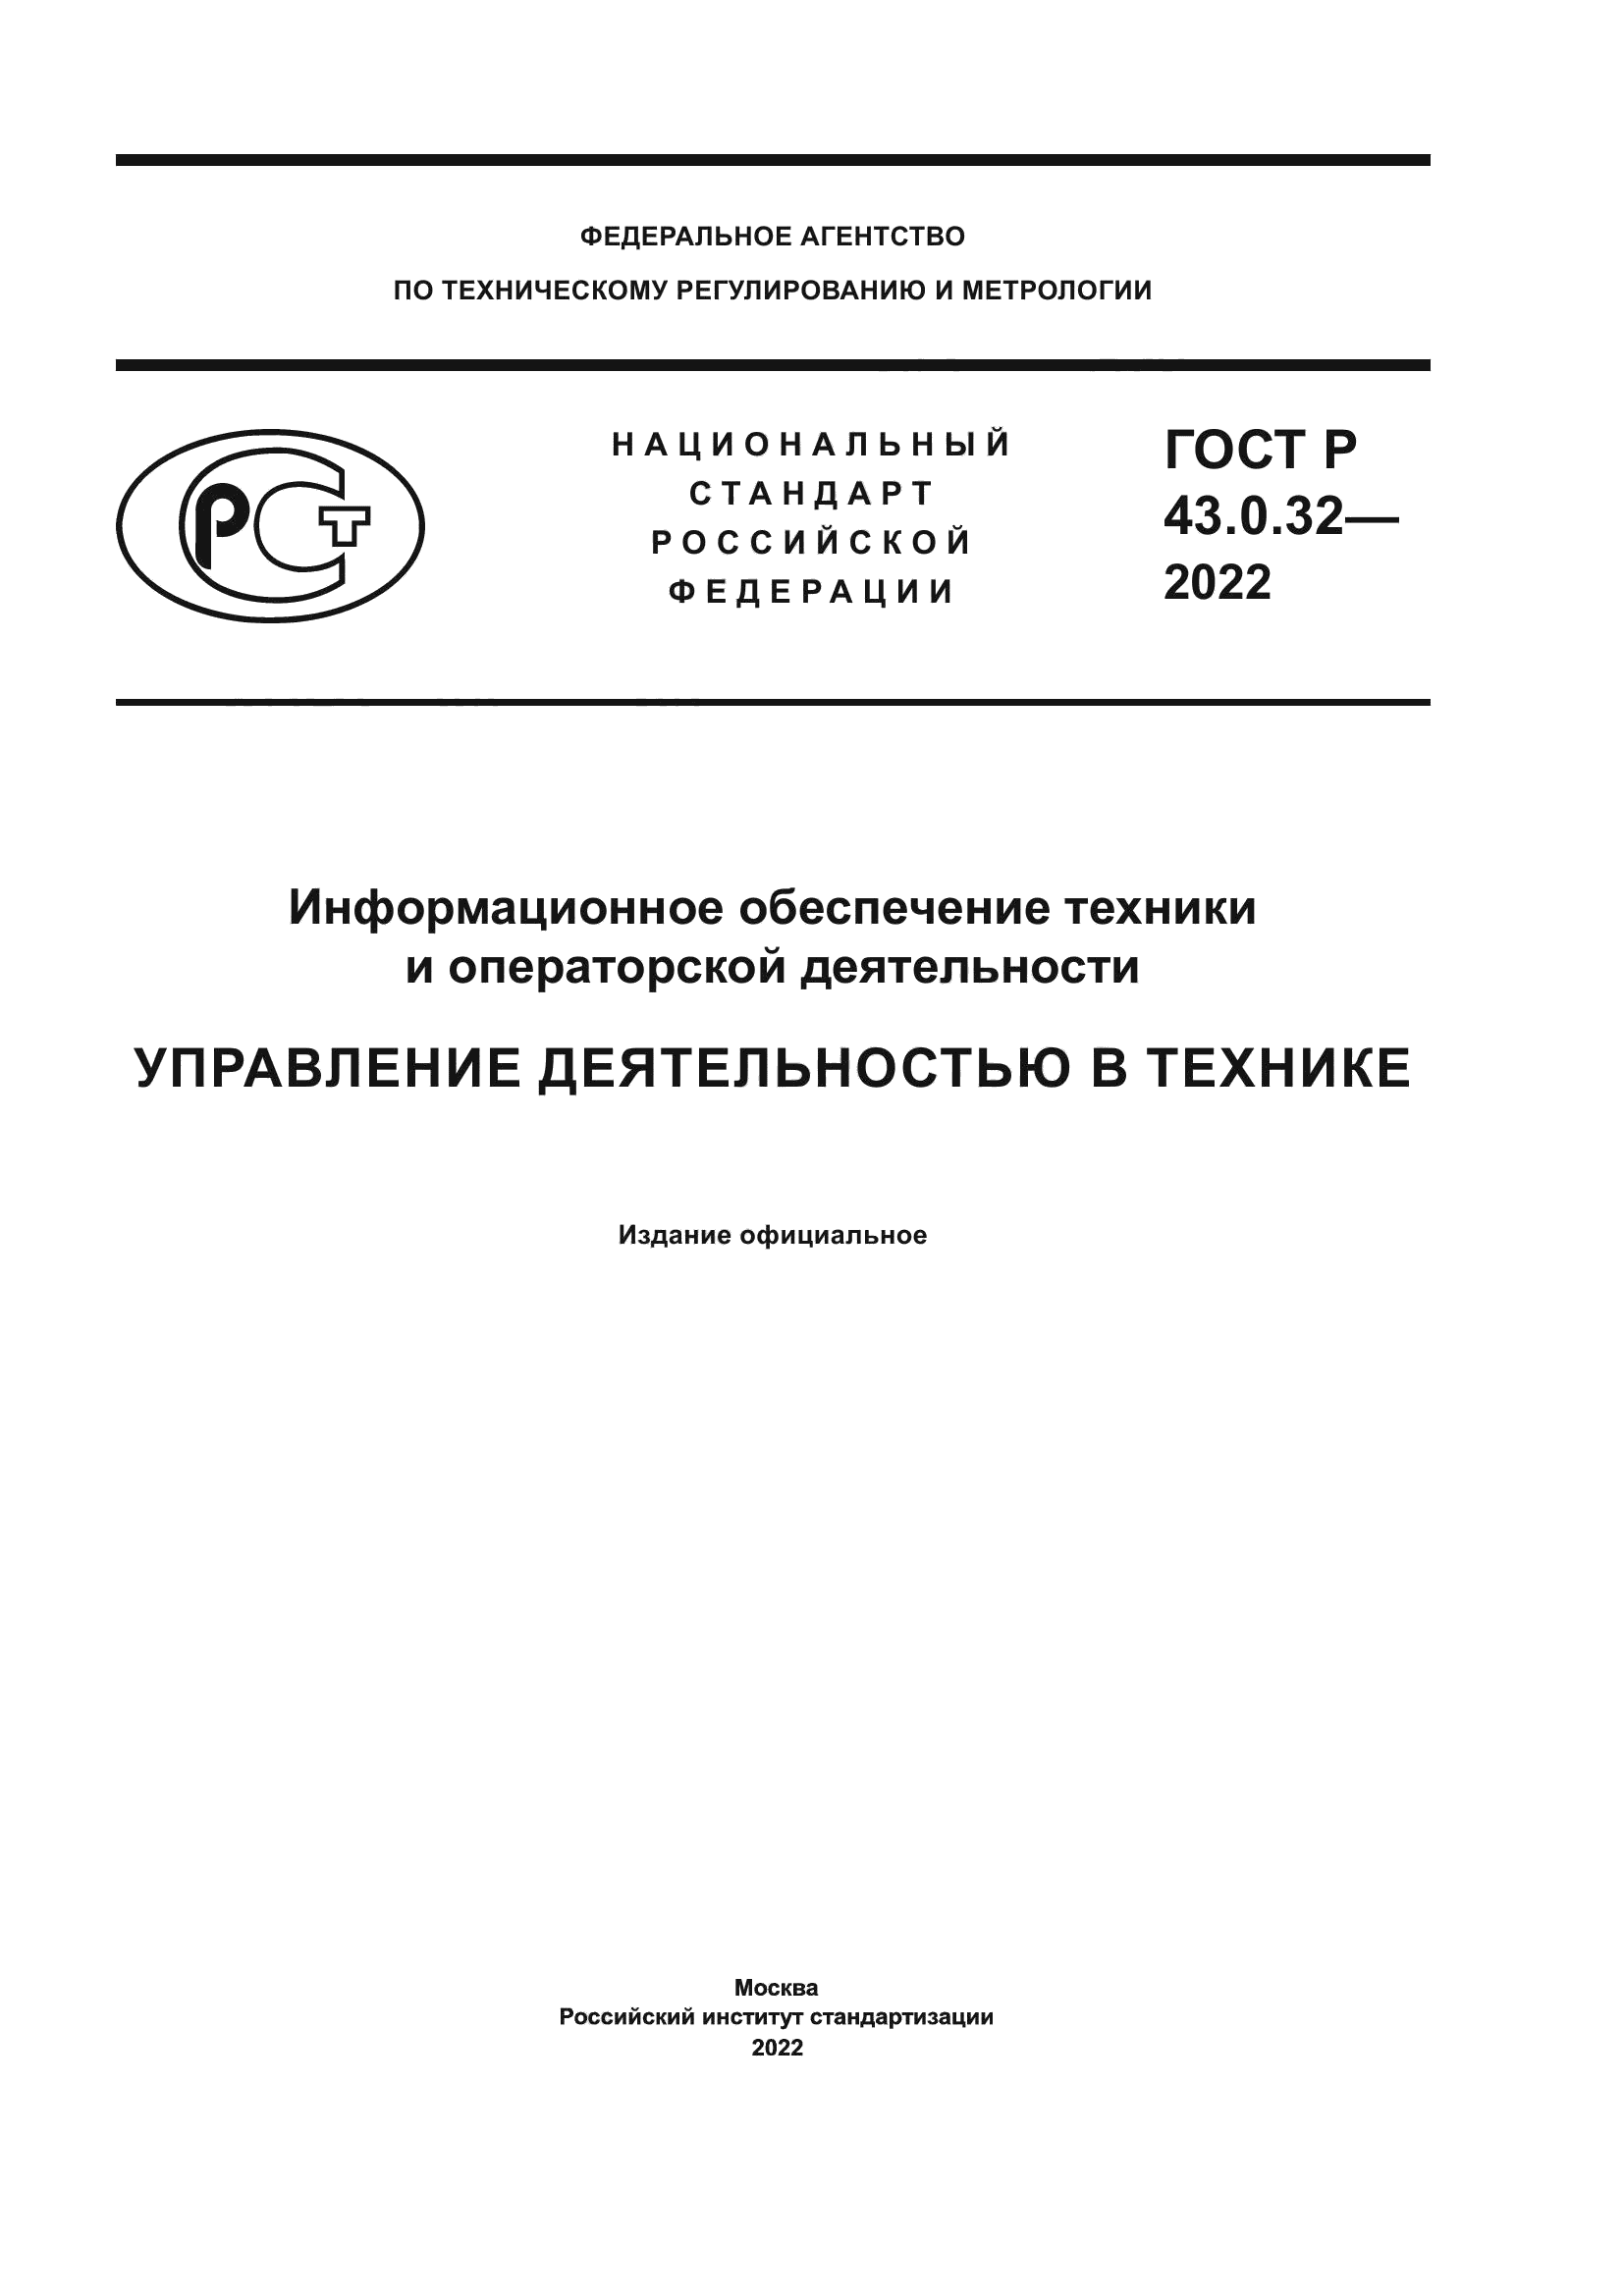 ГОСТ Р 43.0.32-2022